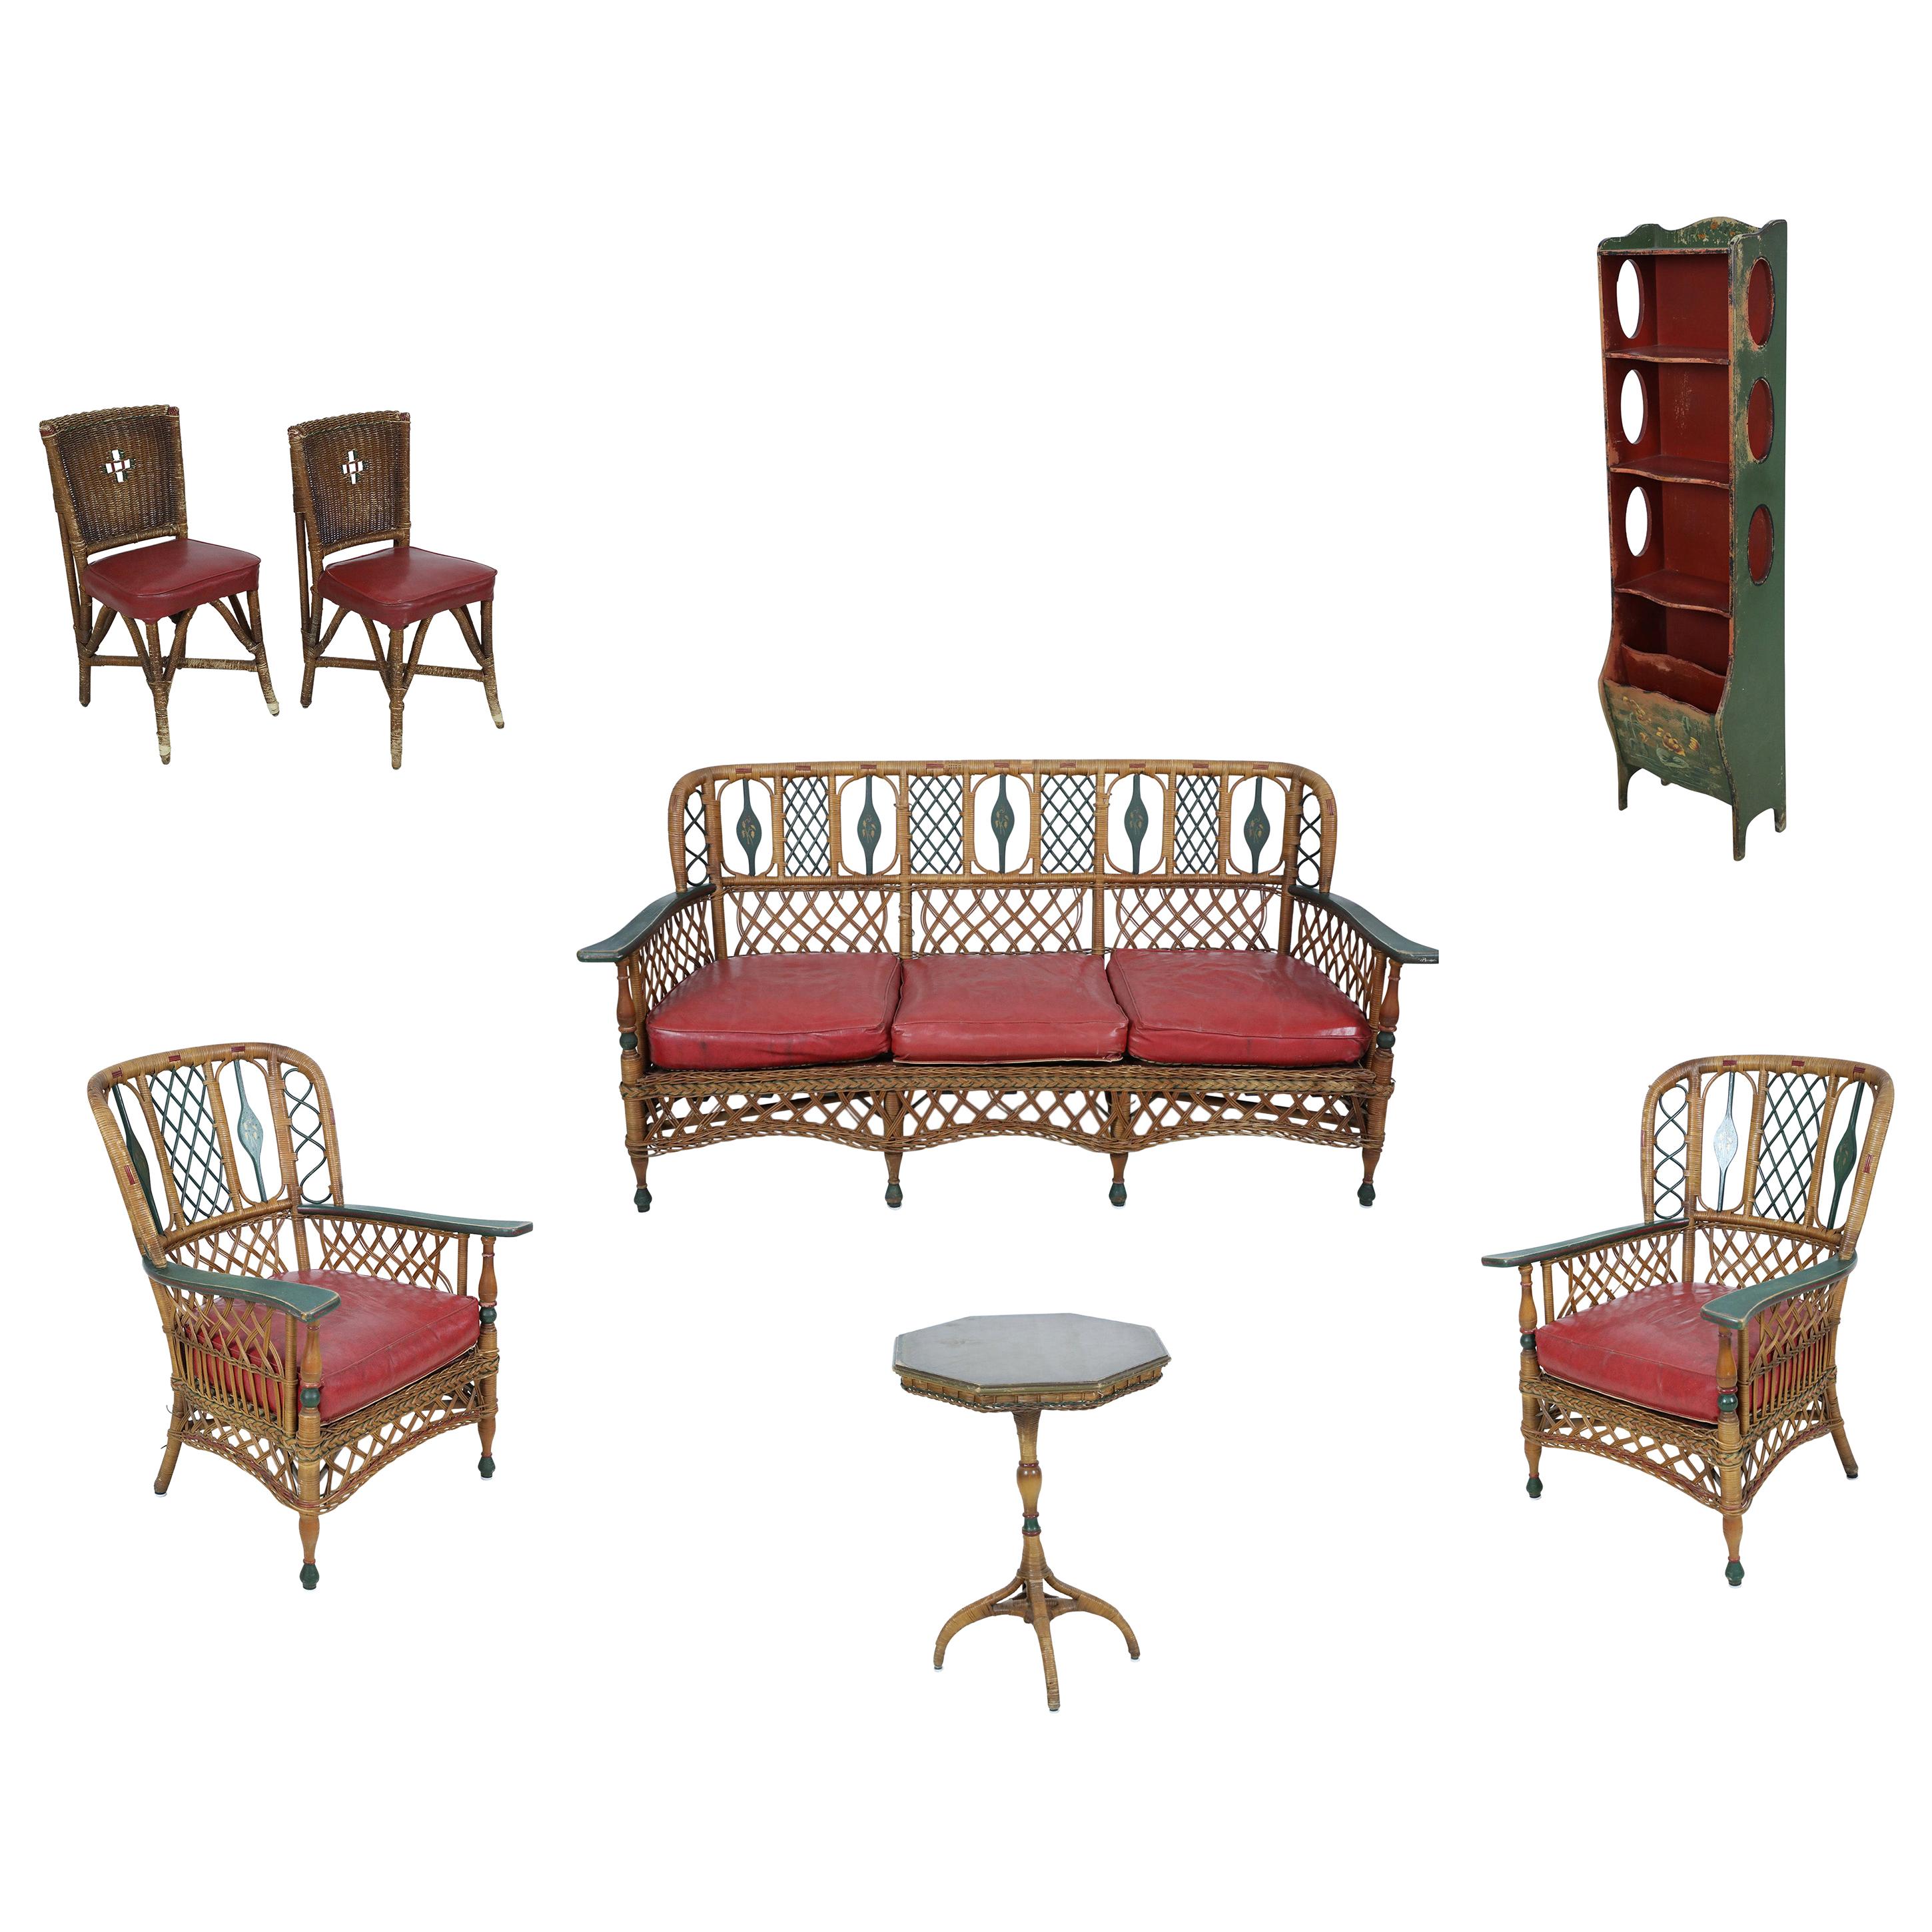 7-Piece American Ypsilanti Art Deco Wicker Furniture Set